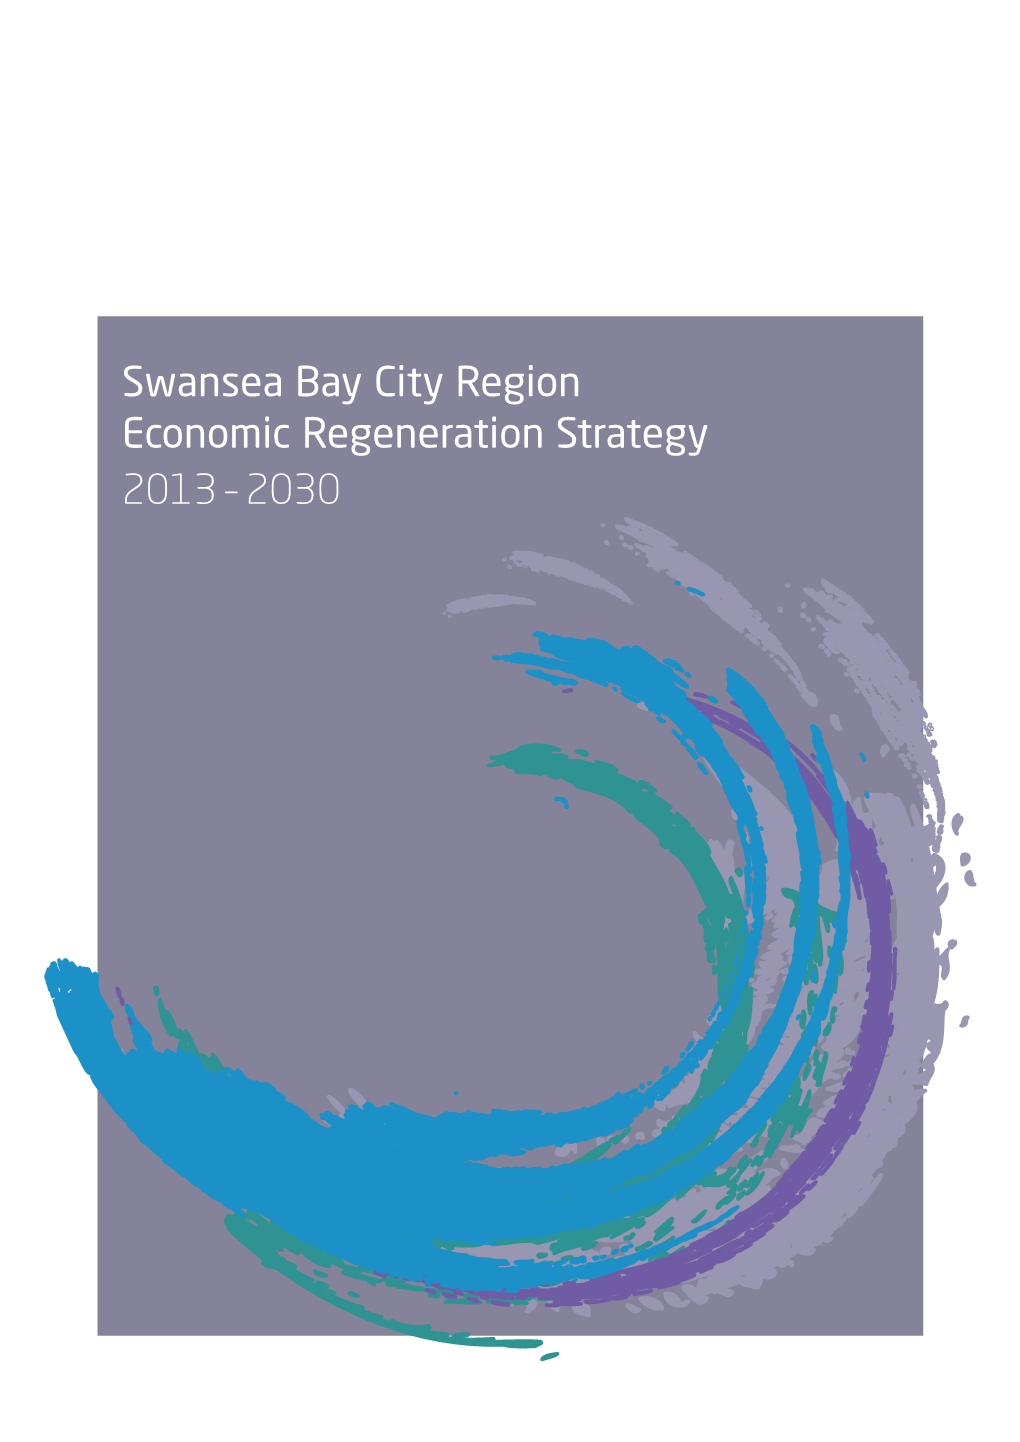 Swansea Bay City Region Economic Regeneration Strategy 2013-2030 Swansea Bay City Region Economic Regeneration Strategy 2013 - 2030